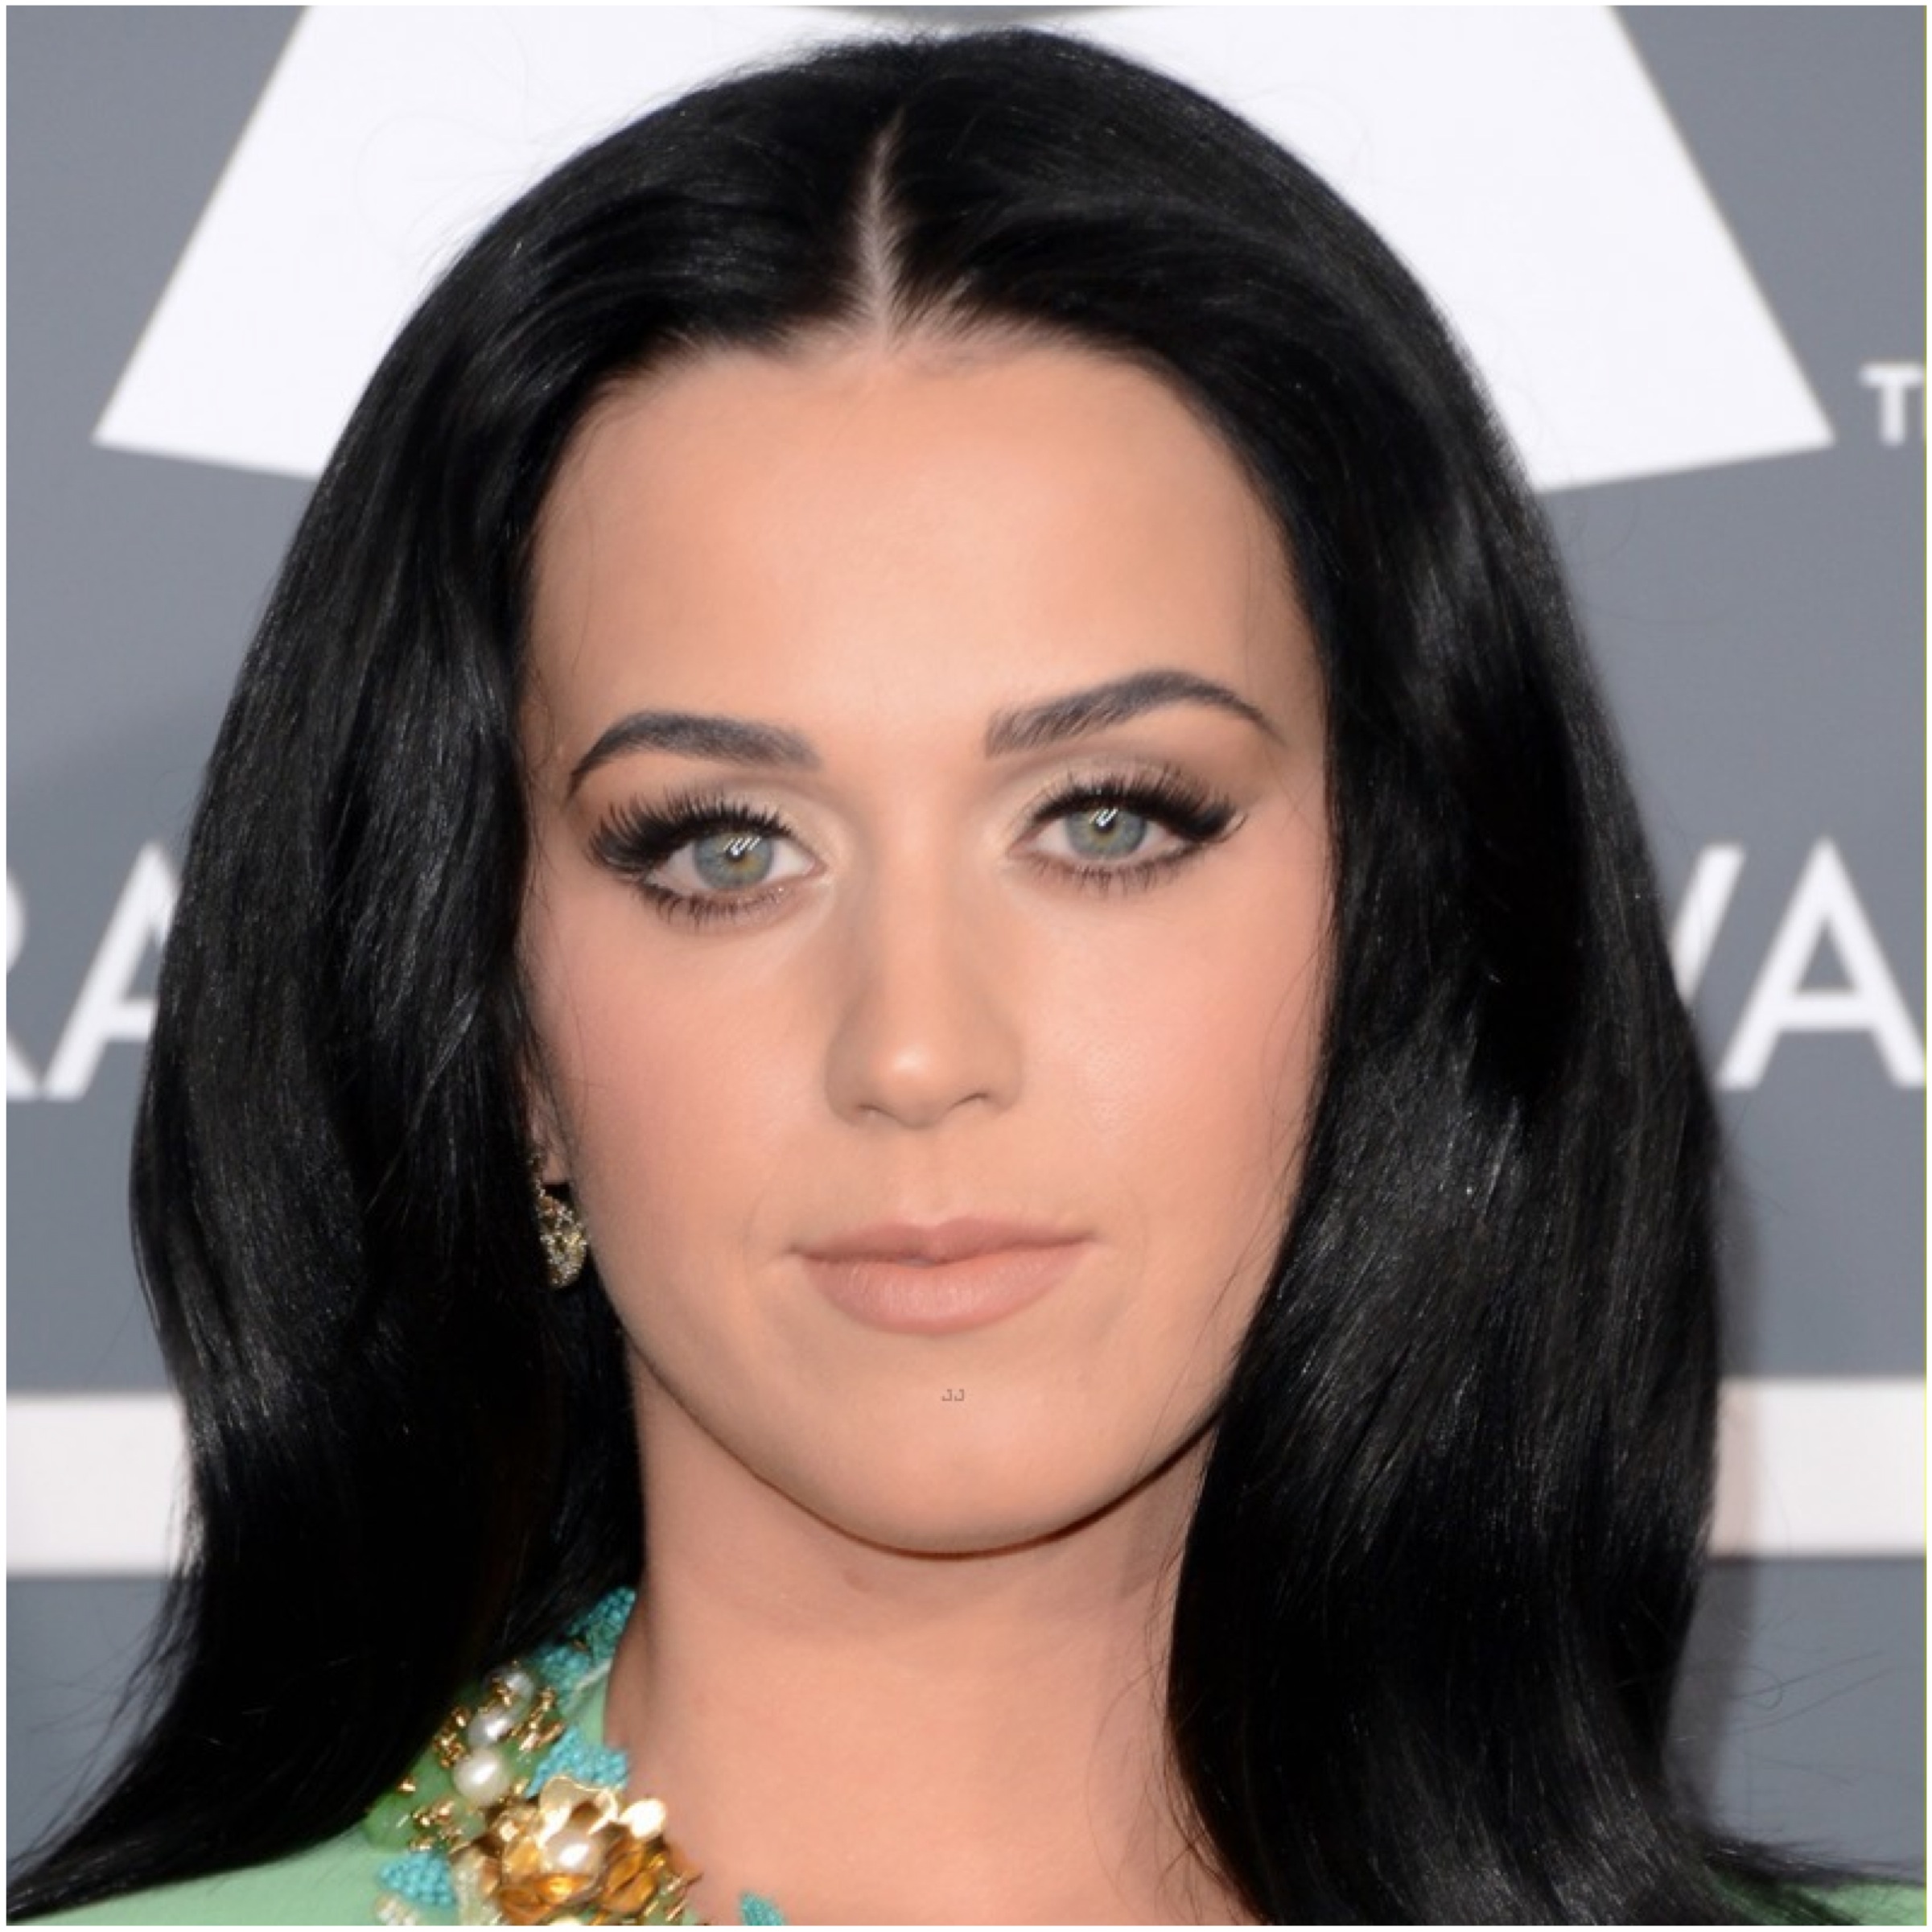 Katy Perrys Grammy Awards Hair & Makeup Look — Voluminous 